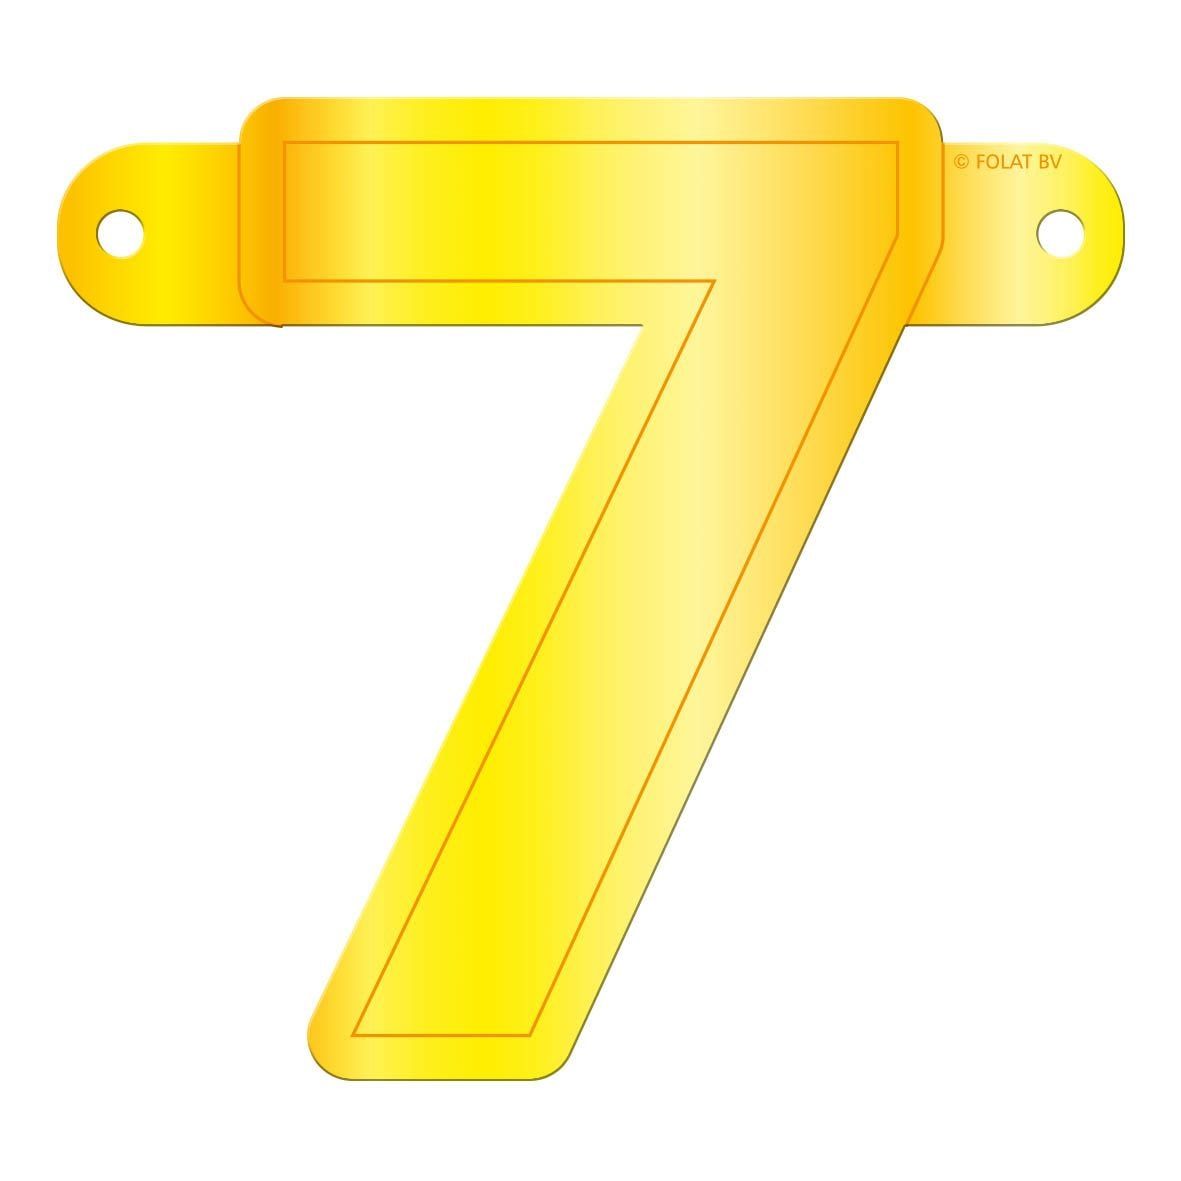 Banner cijfer 7 geel